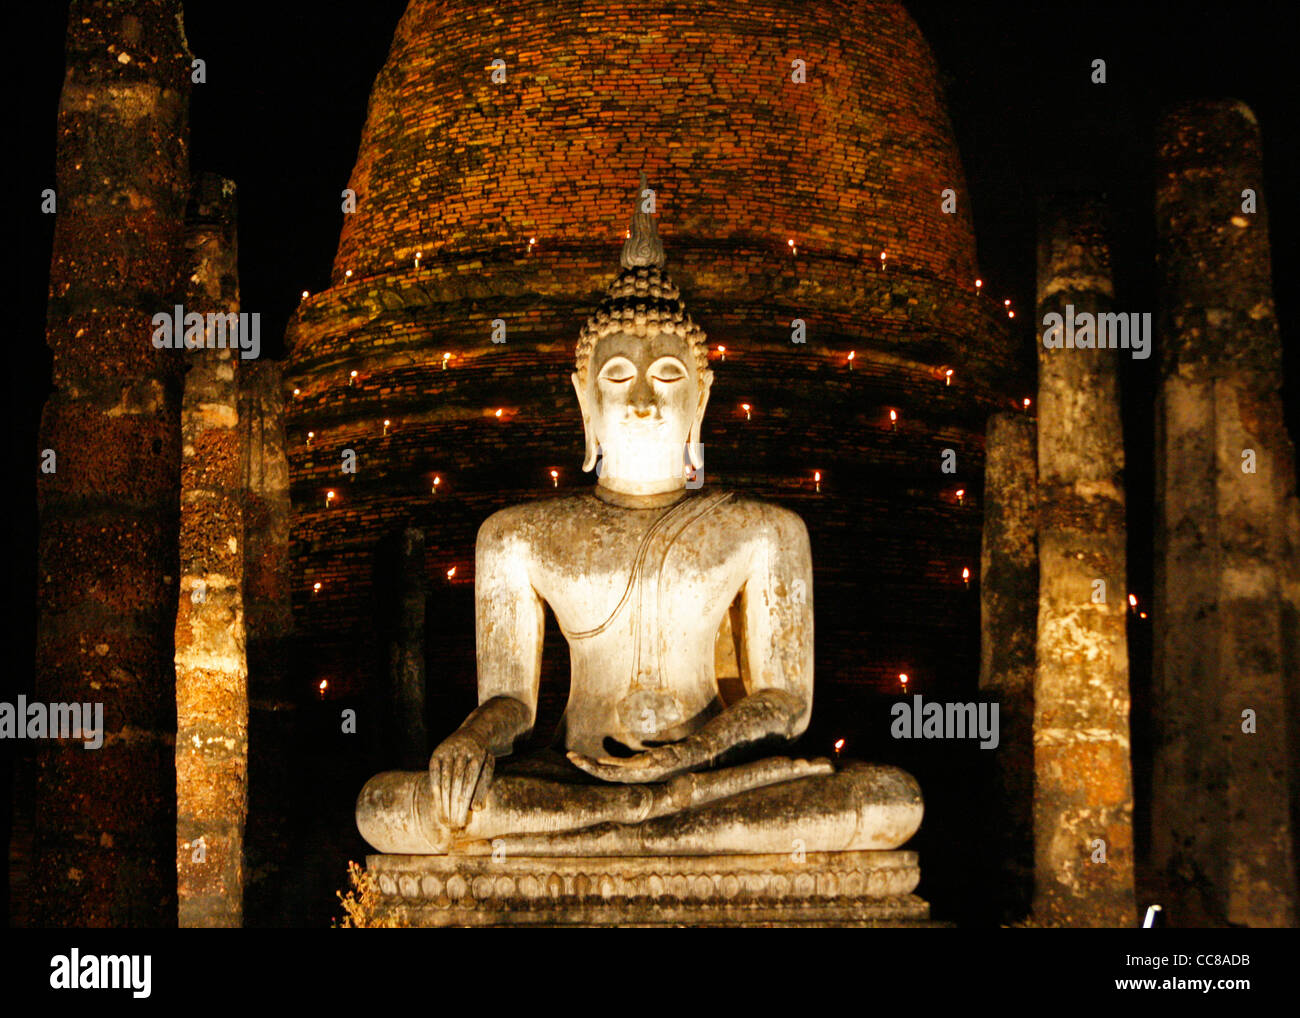 Buddha sculpture inside the Sukothai Historical park, Thailand. Stock Photo